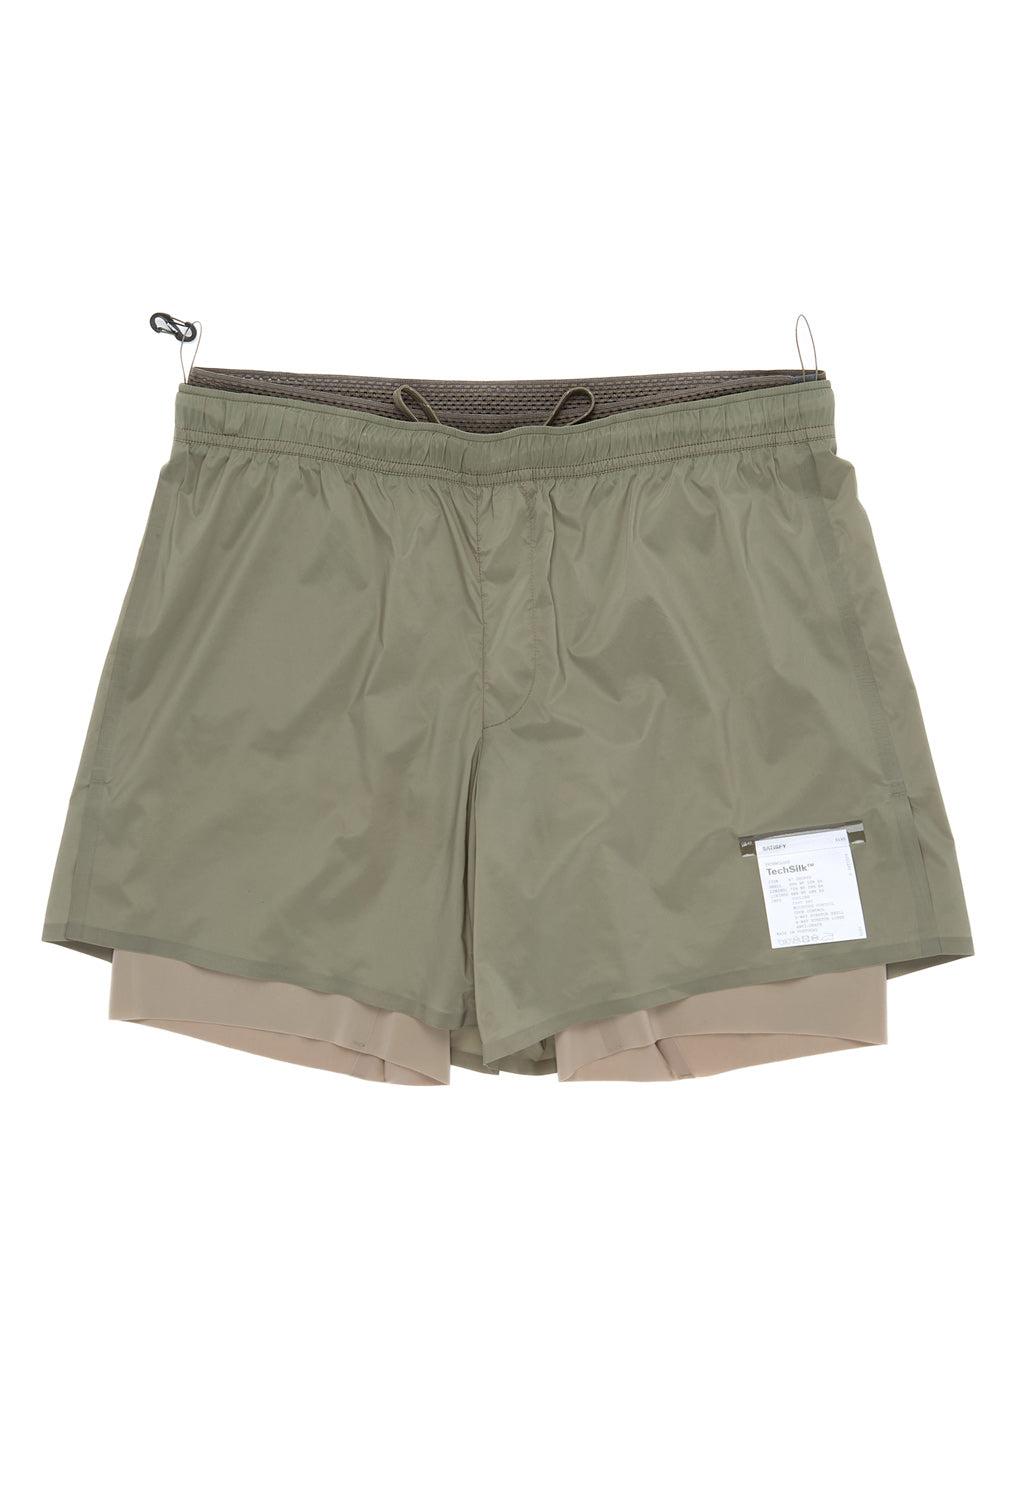 Satisfy Men's TechSilk 8" Shorts - Vetiver